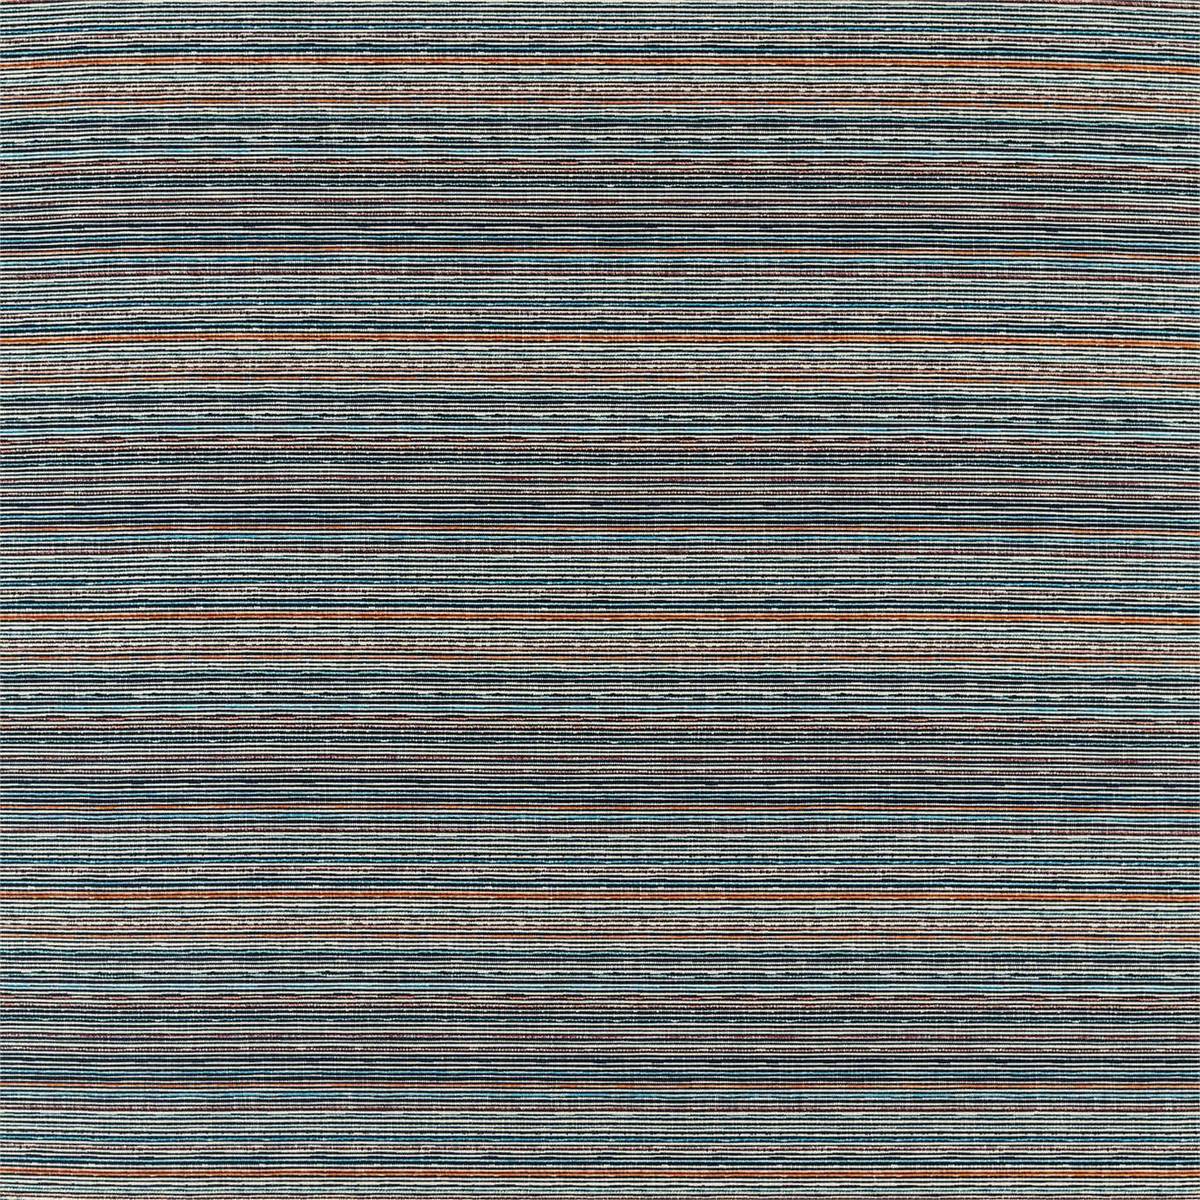 Nuka Mandarin/Teal/Aqua Fabric by Harlequin